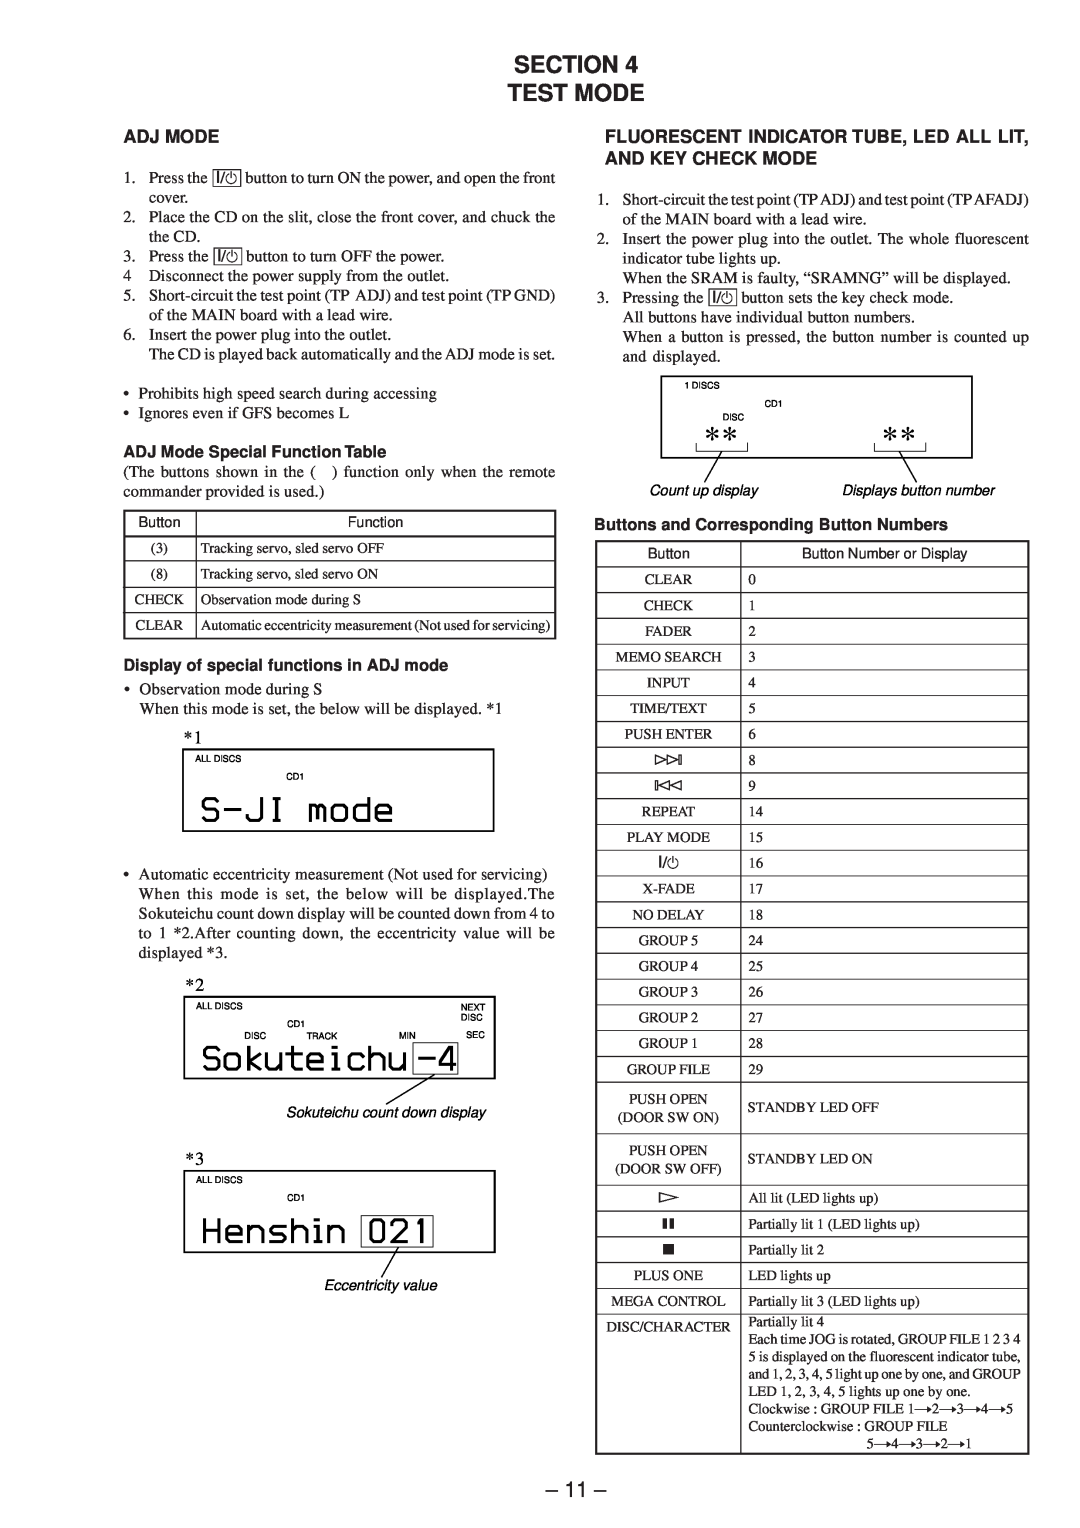 Technicolor - Thomson CDP-CX57 service manual S-JImode, Sokuteichu, Henshin, Test Mode, ADJ Mode Special Function Table 